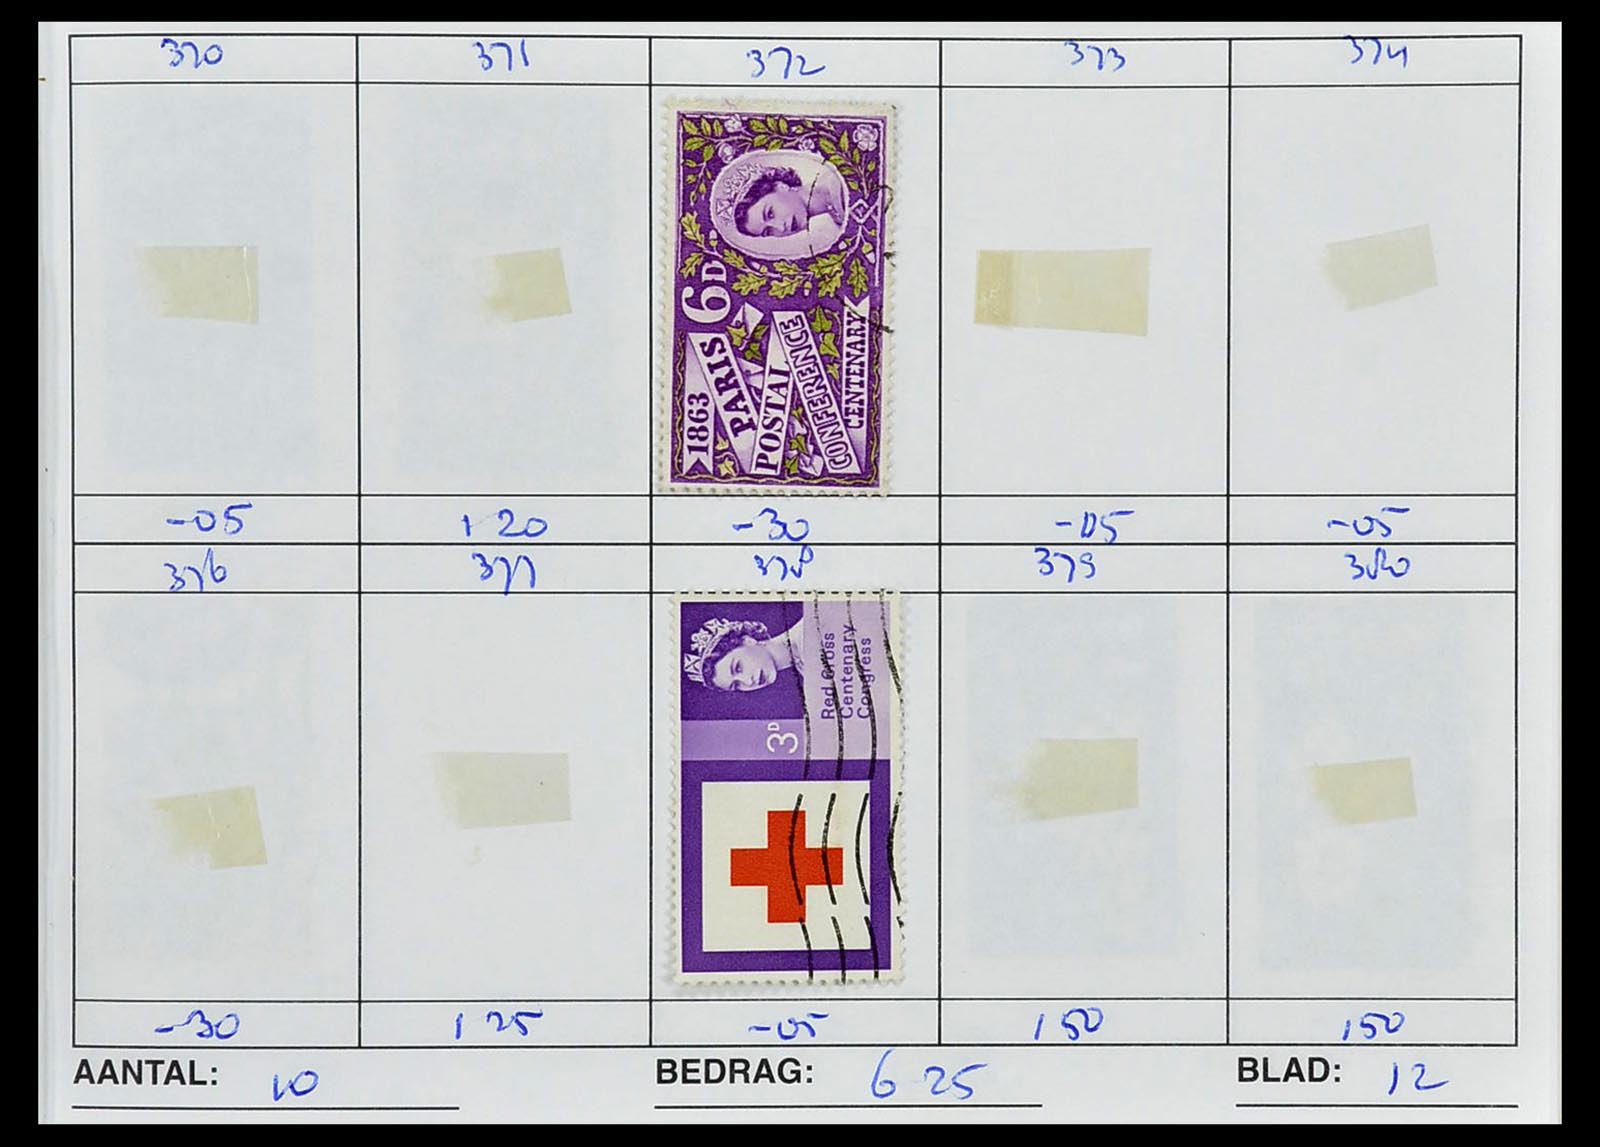 34612 0050 - Stamp Collection 34612 Wereld rondzendboekjes.